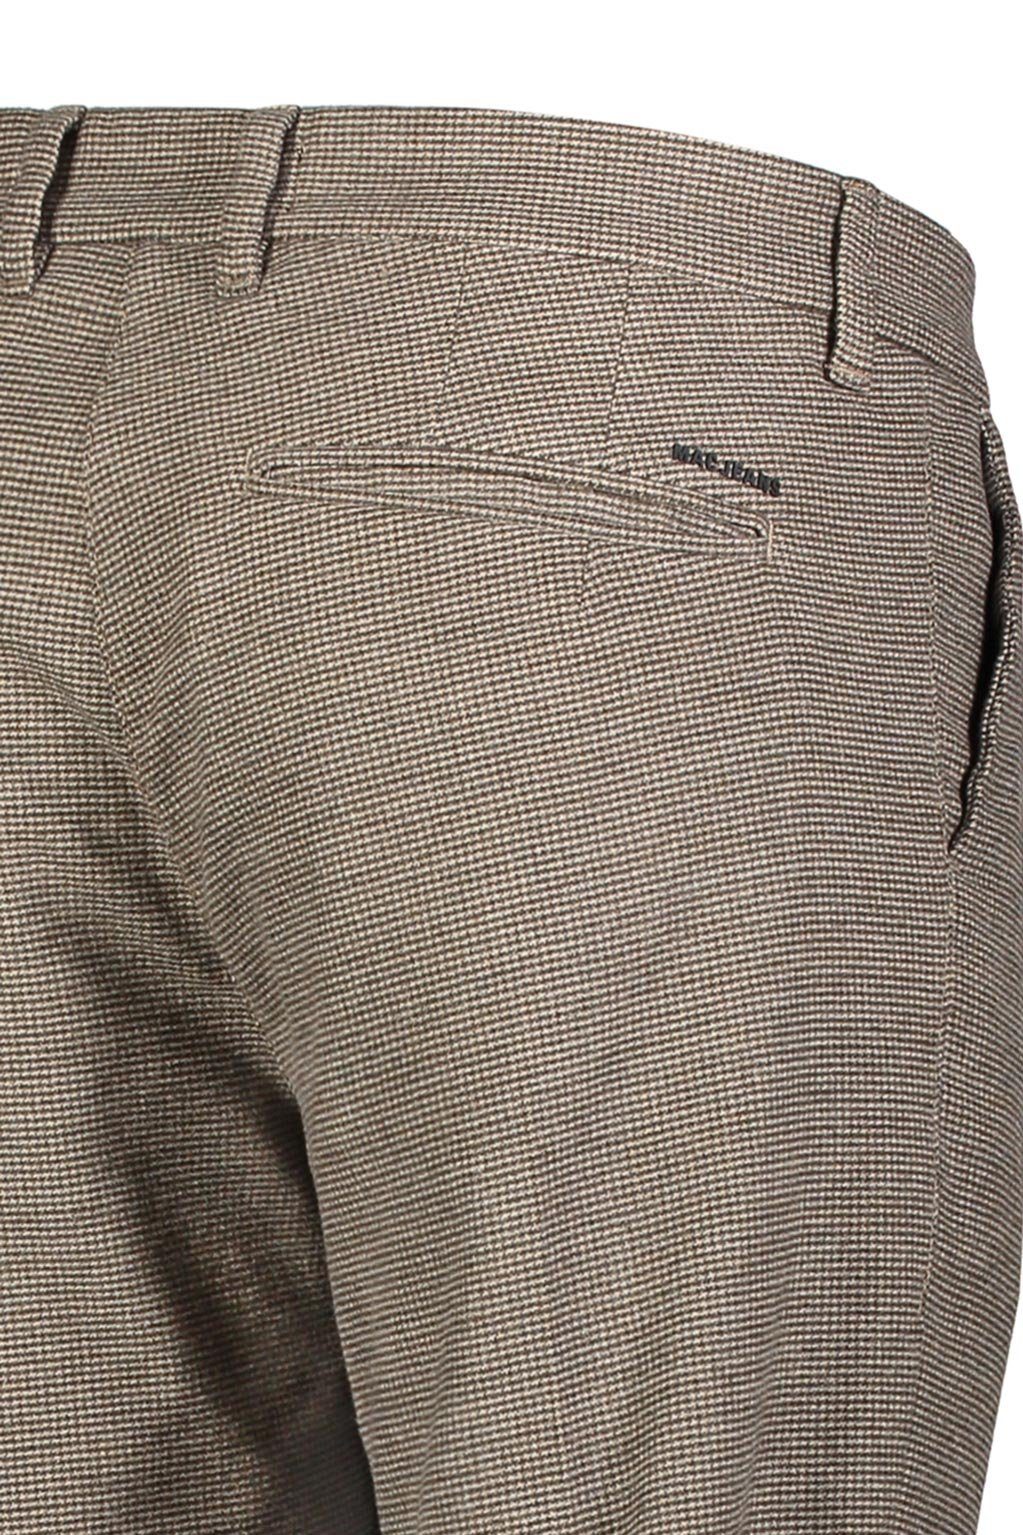 5-Pocket-Jeans light LENNOX vicuna pepita 268P MAC 6344-00-0732L MAC beige